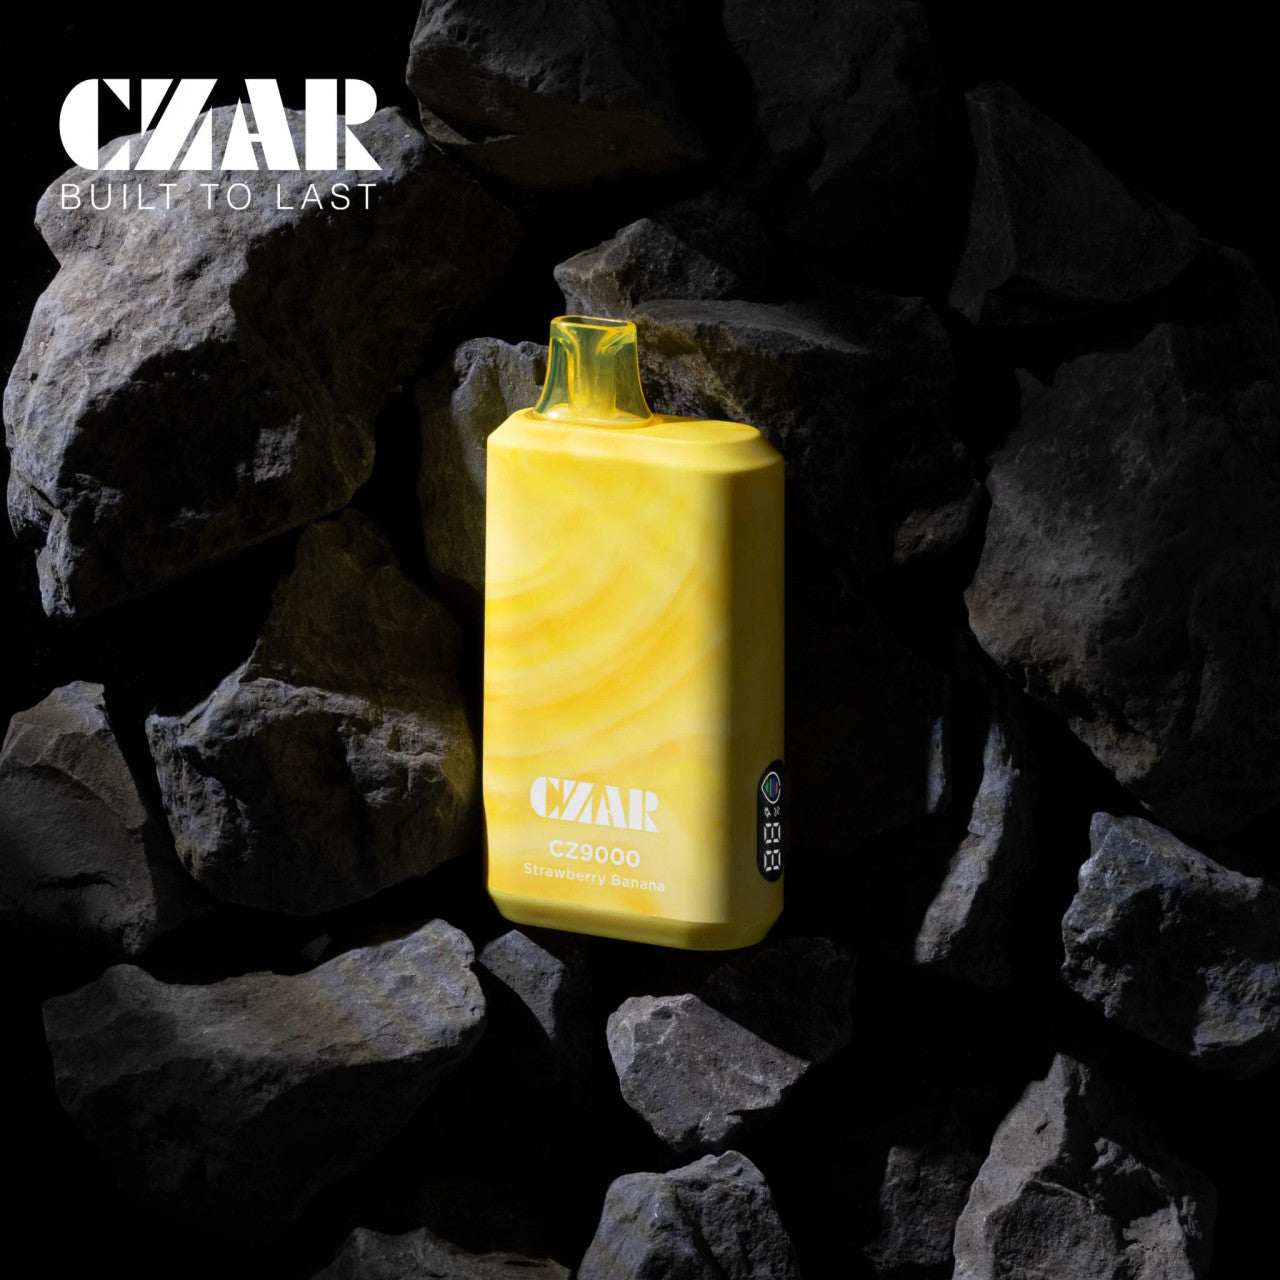 CZAR CZ9000 Puff Disposable Vape Device